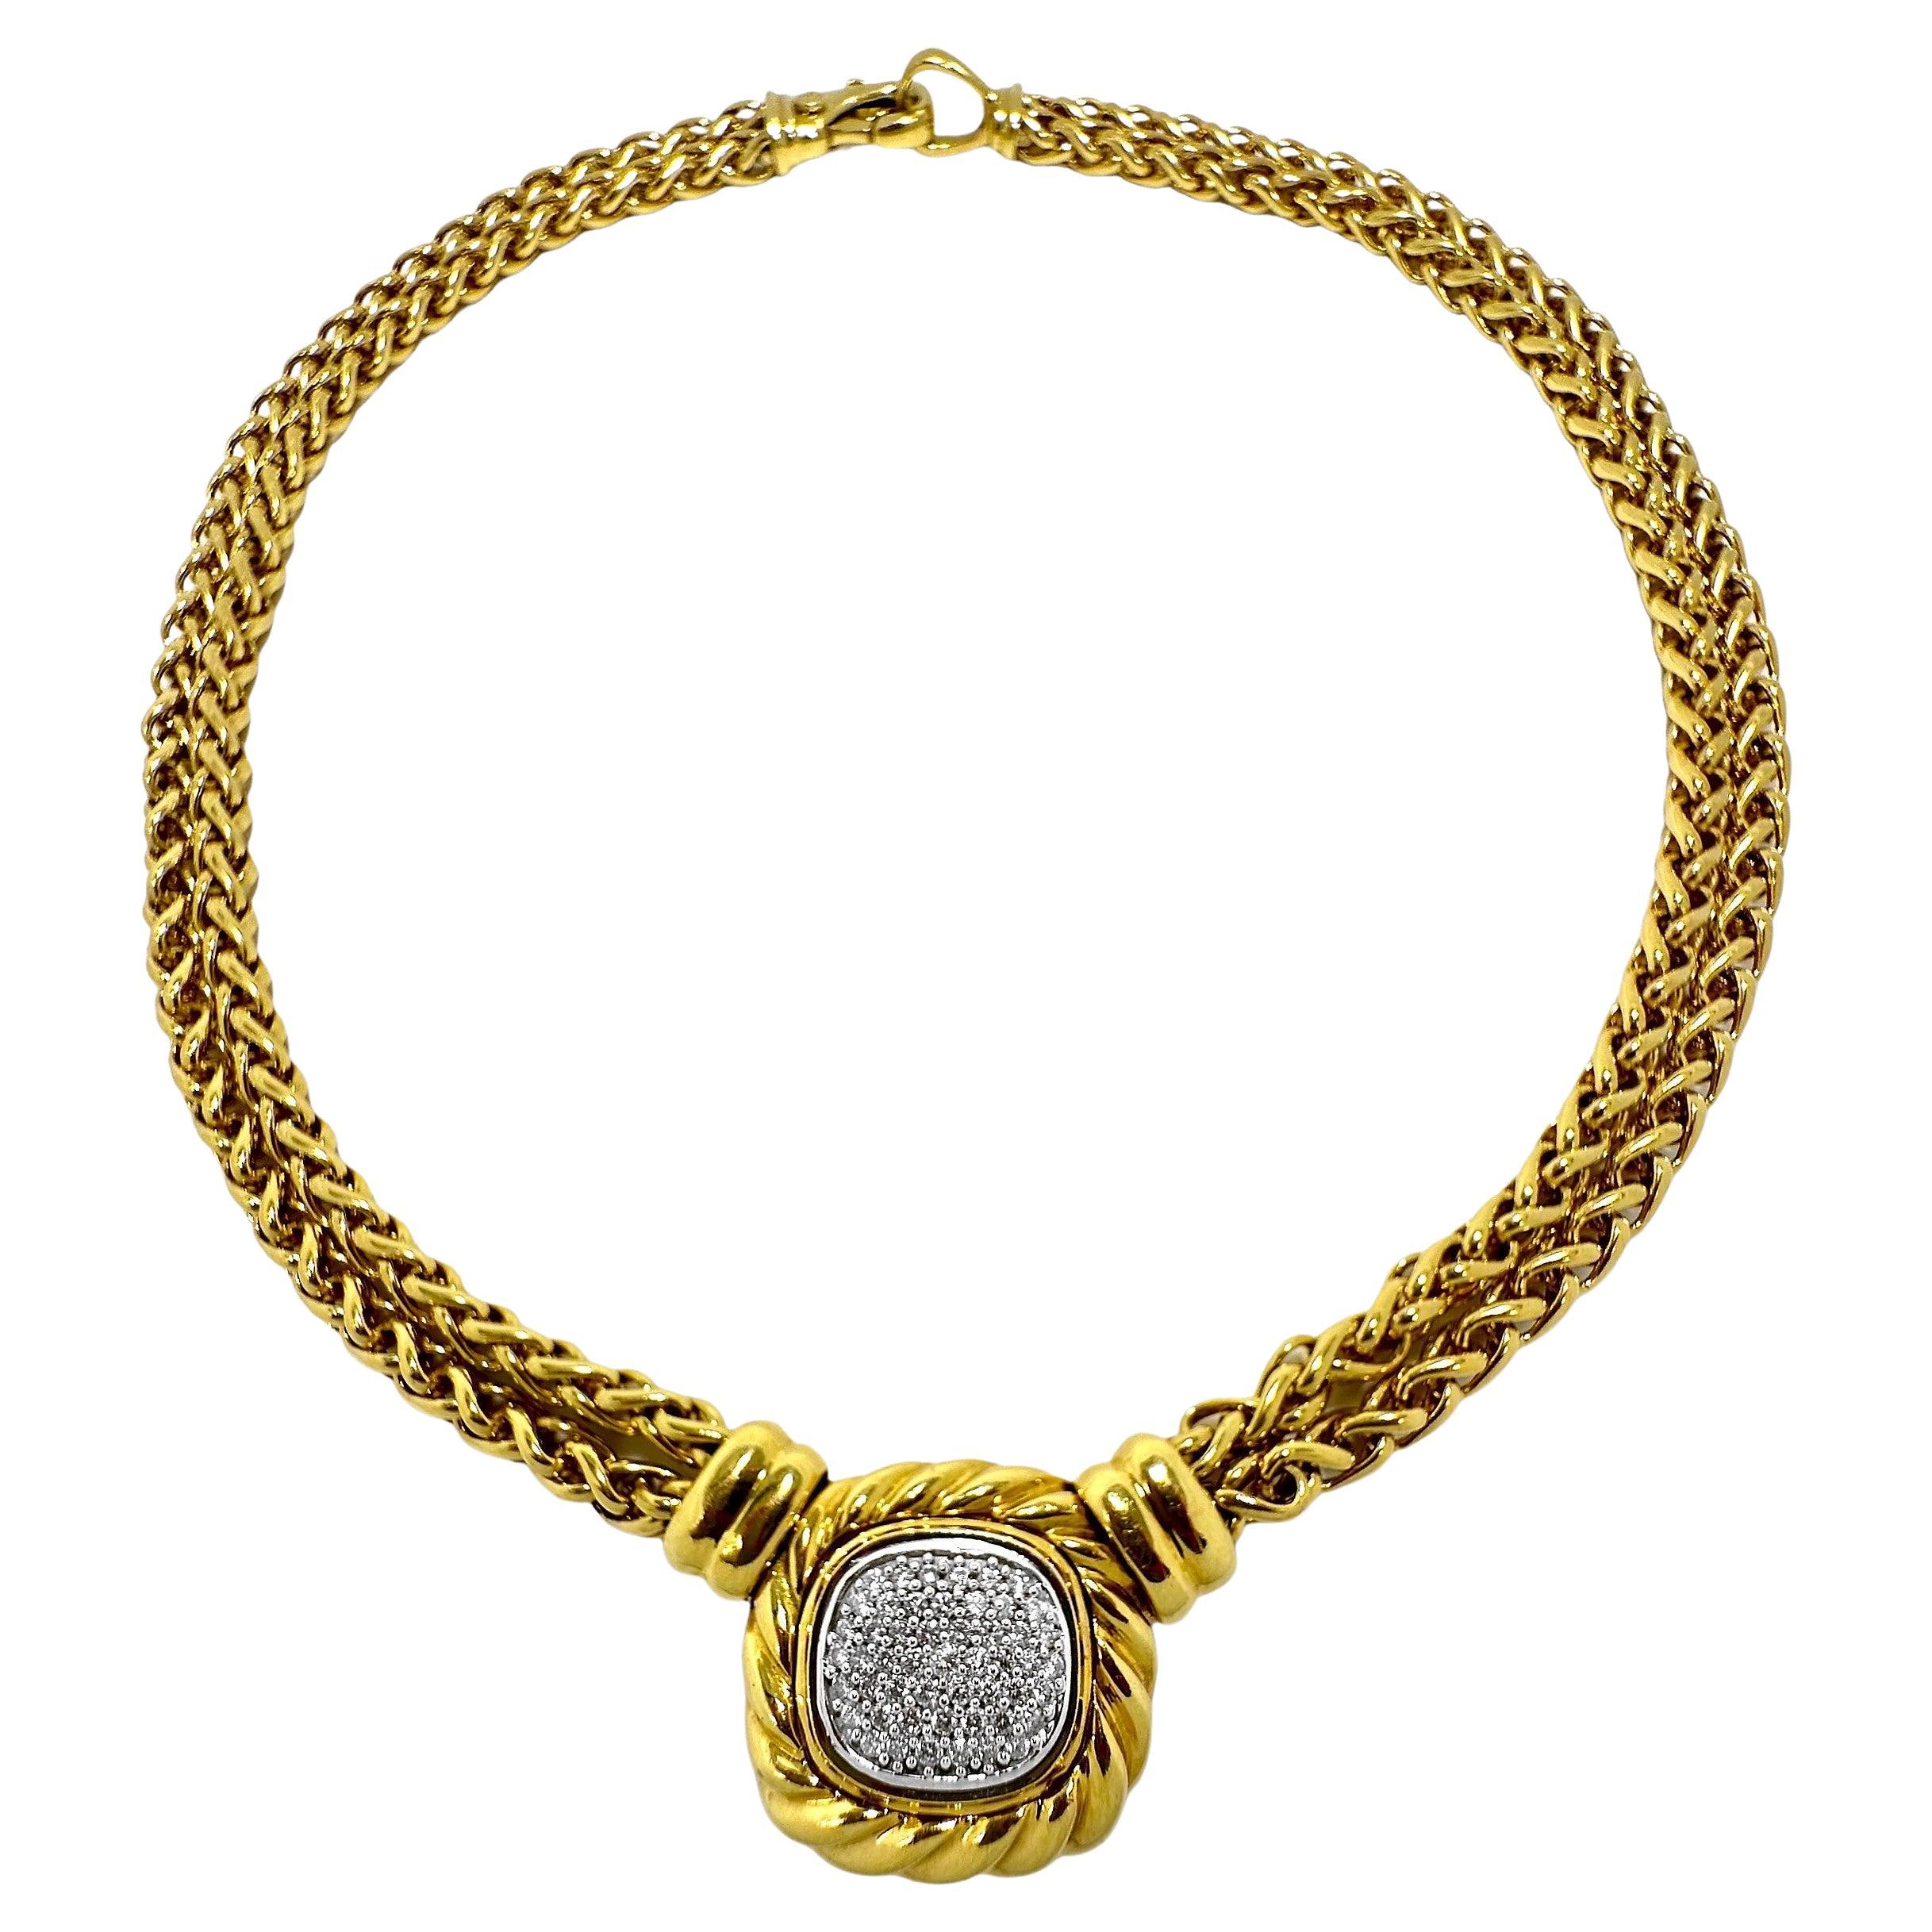 David Yurman 18K Gold and Diamond Choker Necklace with Pave Set Diamond Center